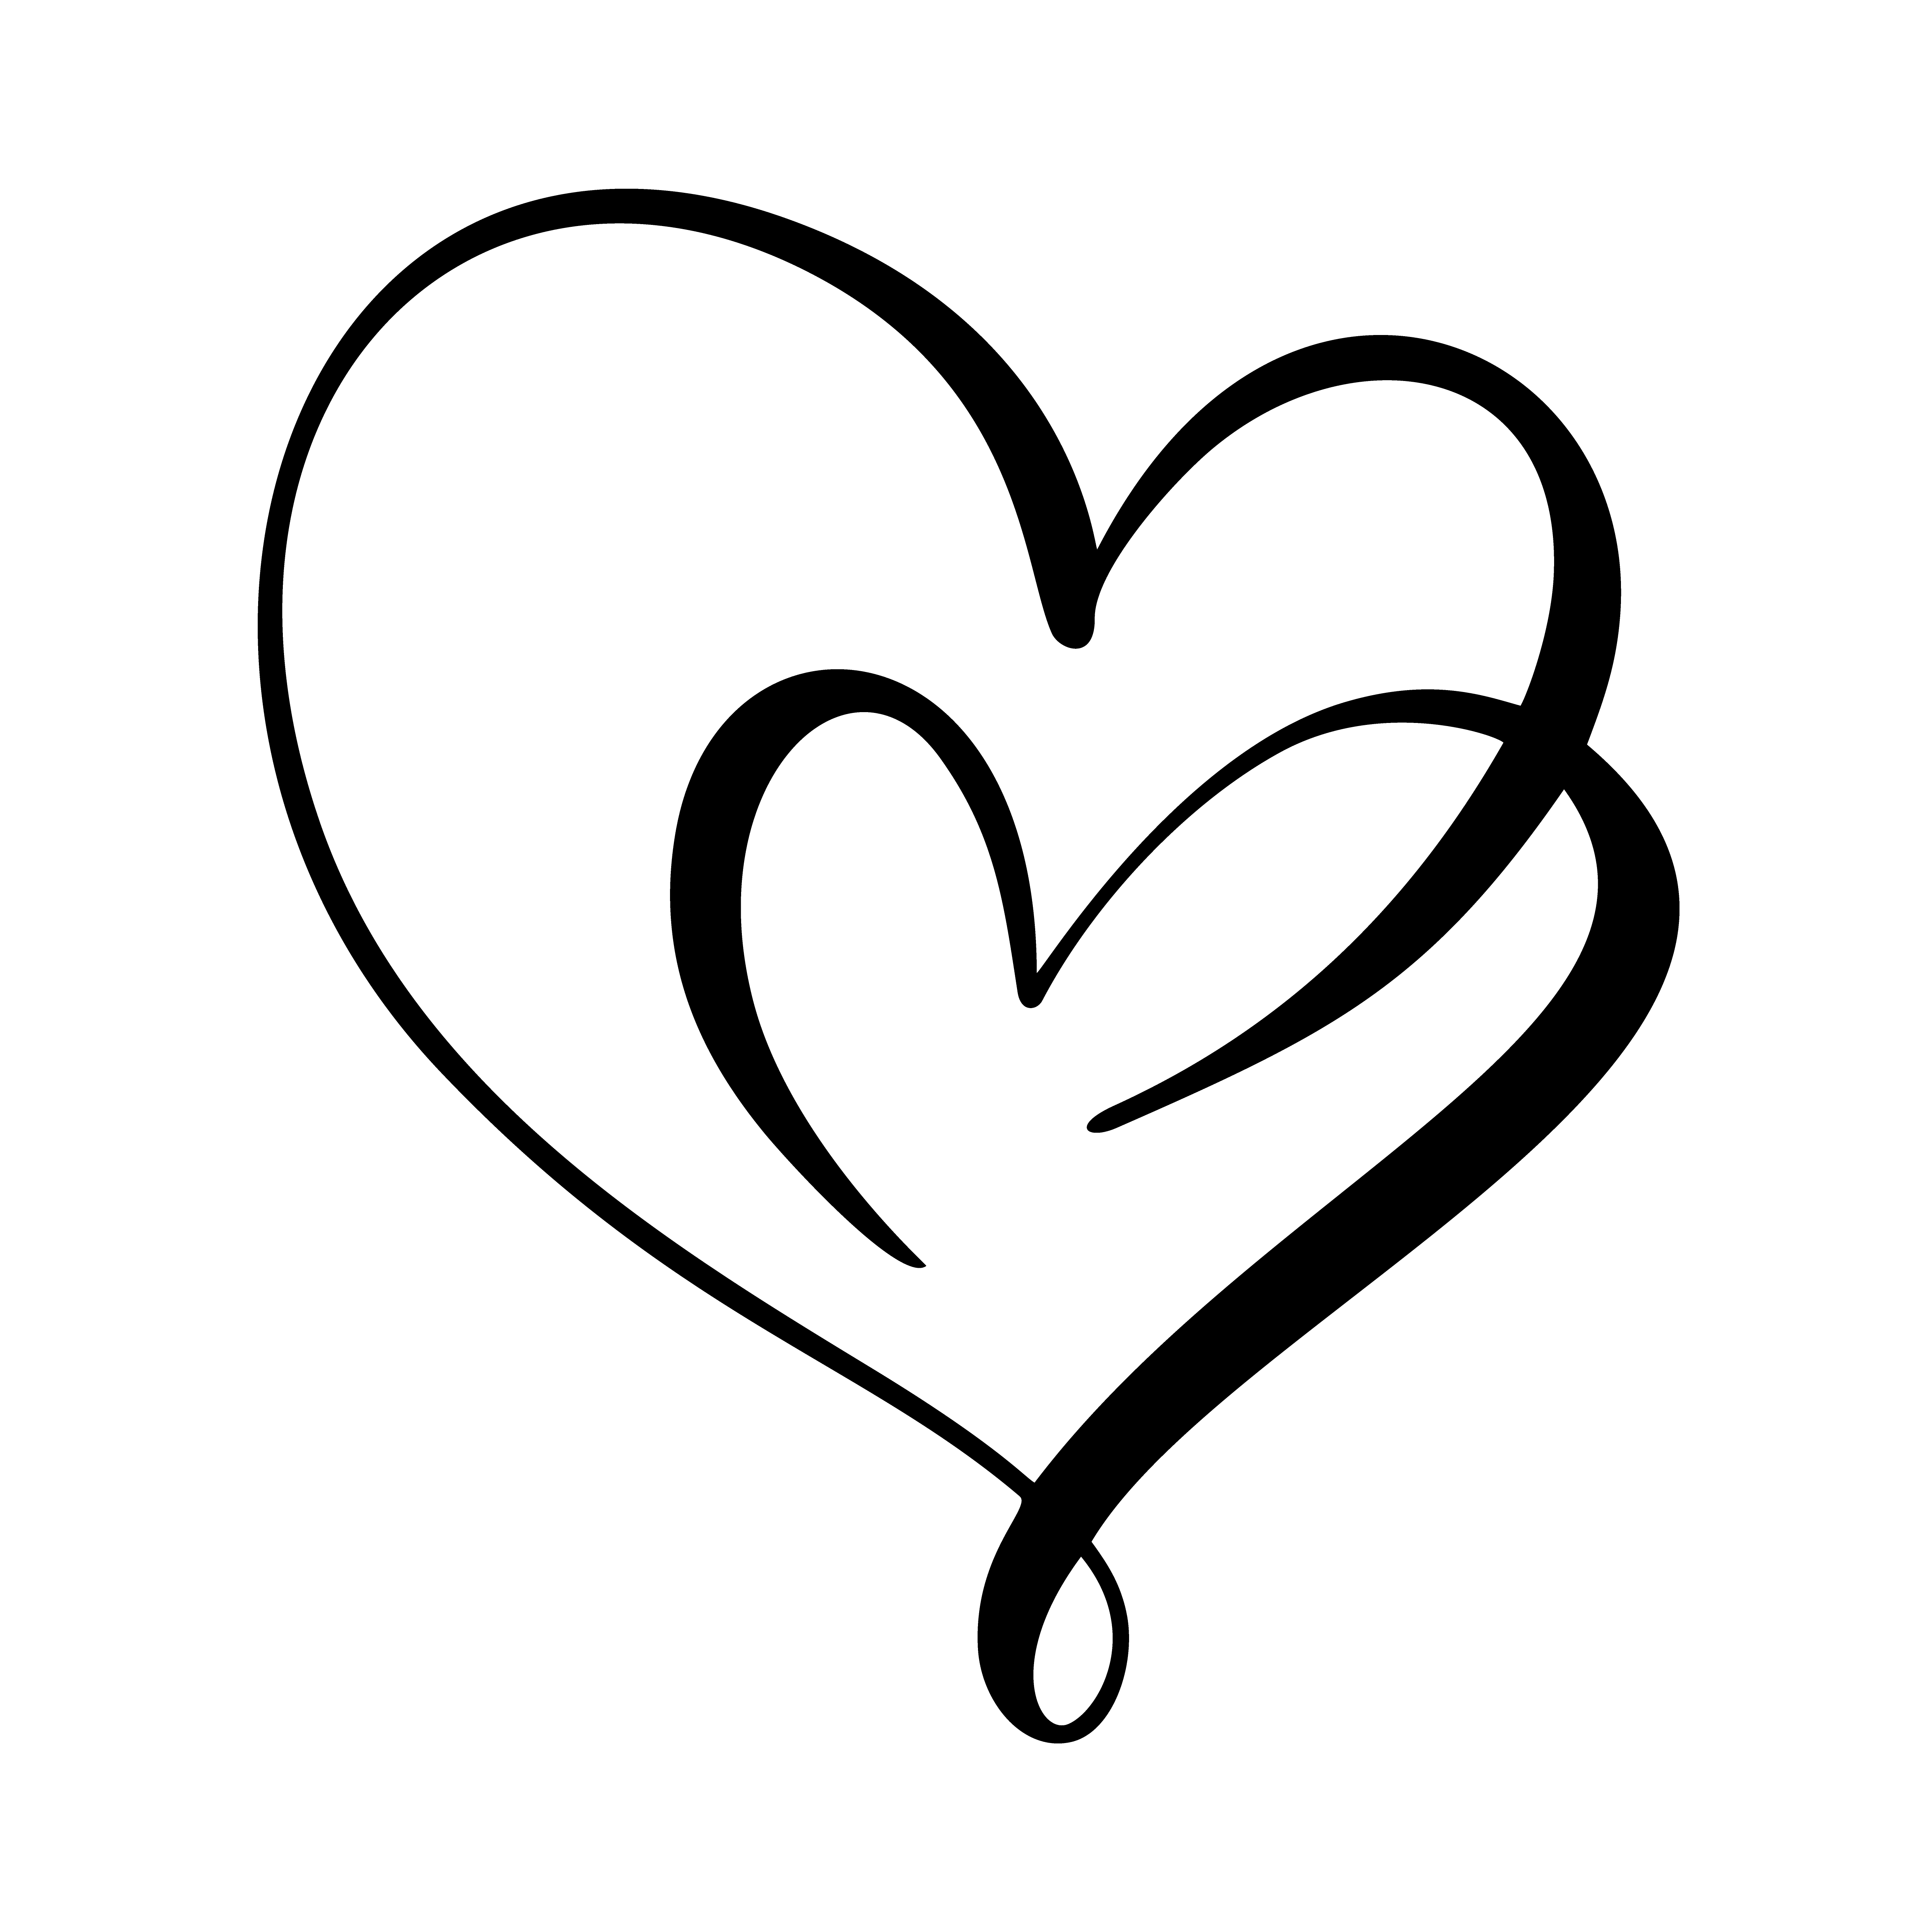 Download Calligraphic love heart sign - Download Free Vectors, Clipart Graphics & Vector Art